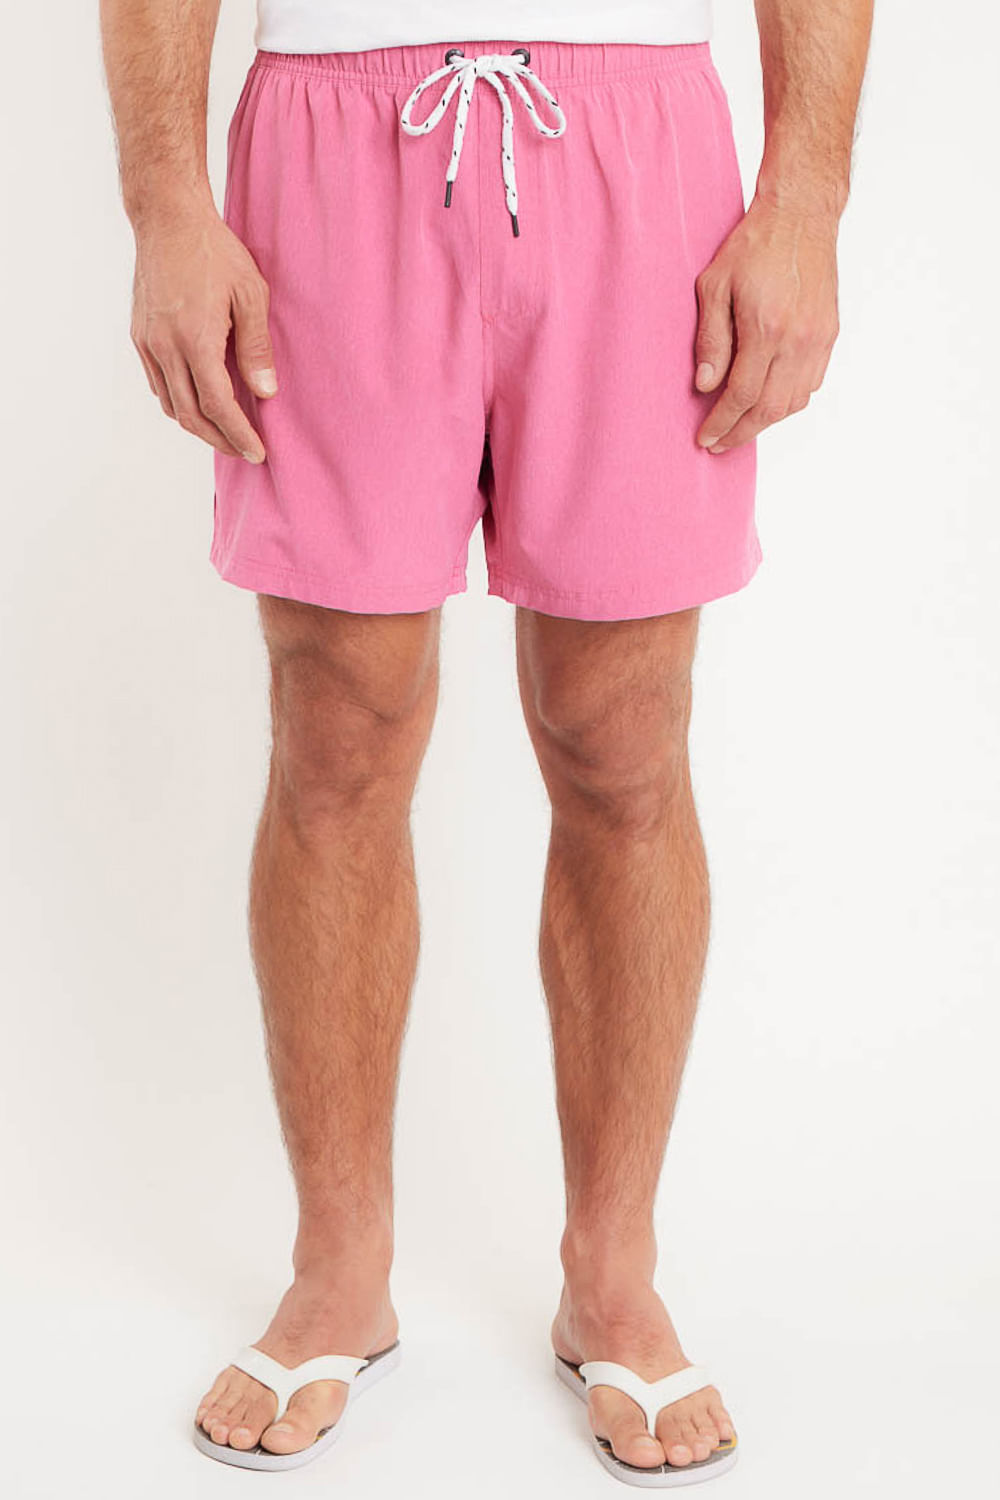 Shorts de Elástico Mescla Color - Aramis